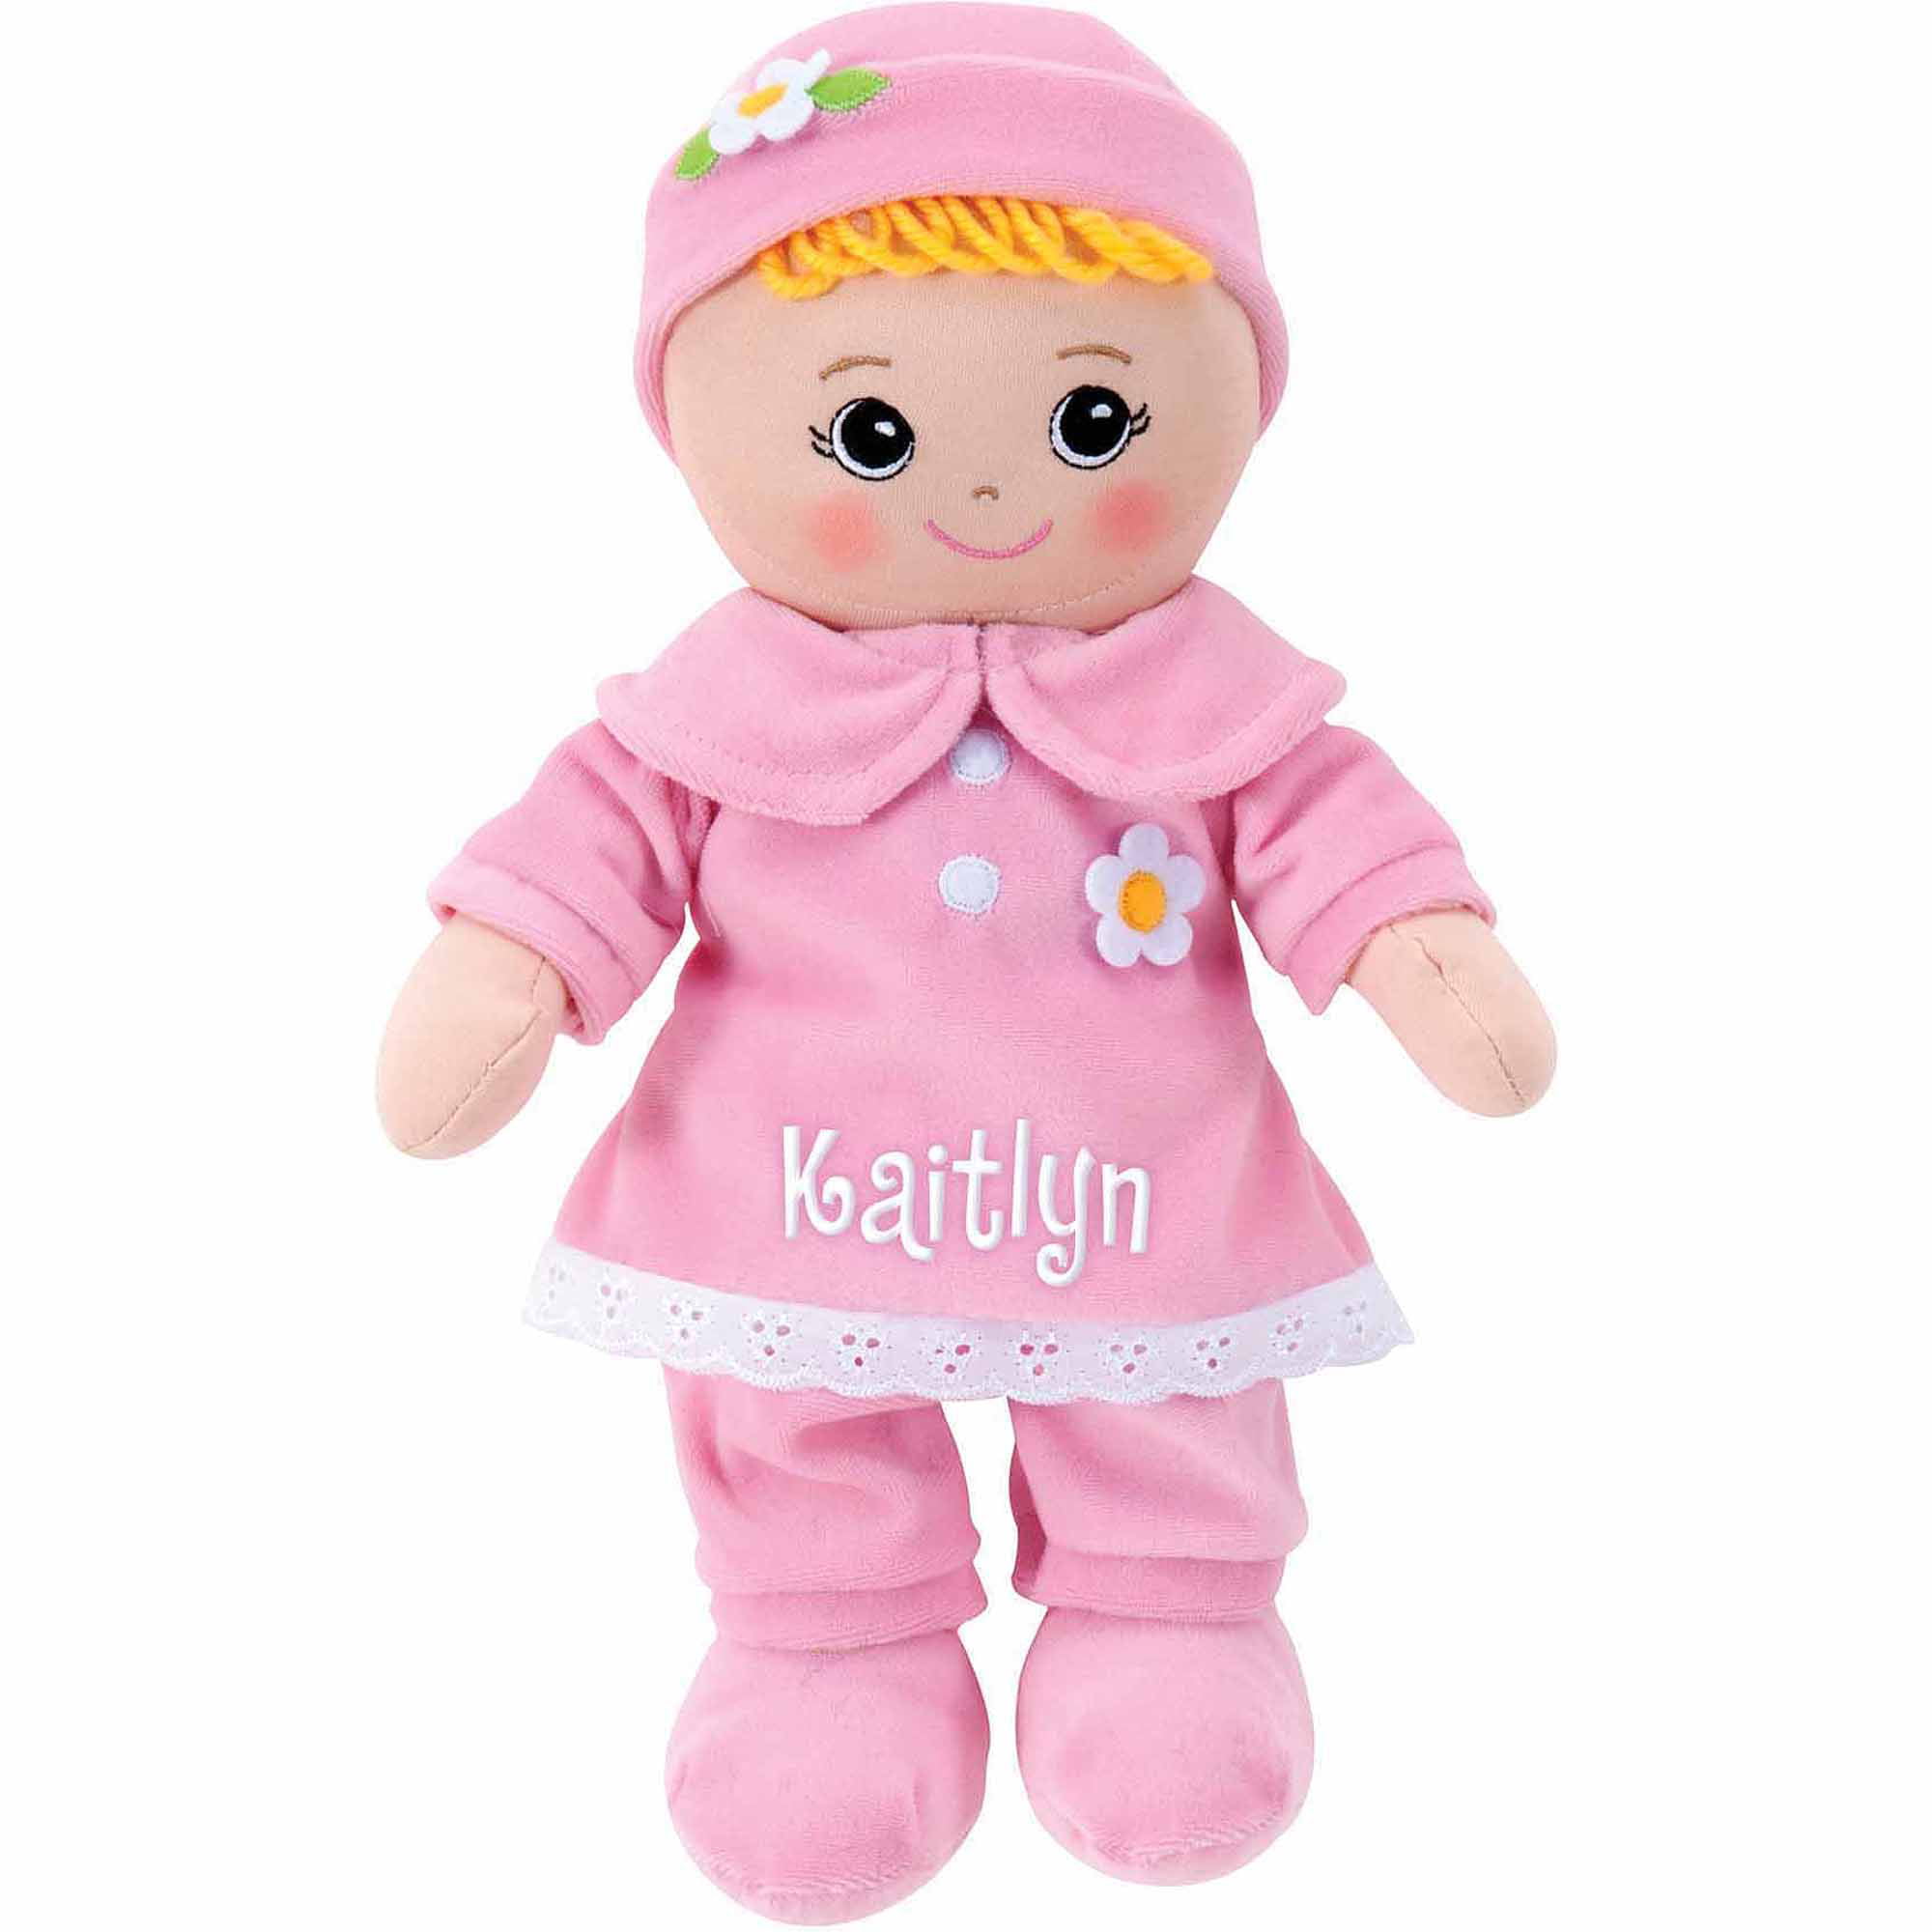 Personalized Baby Doll - Walmart.com 